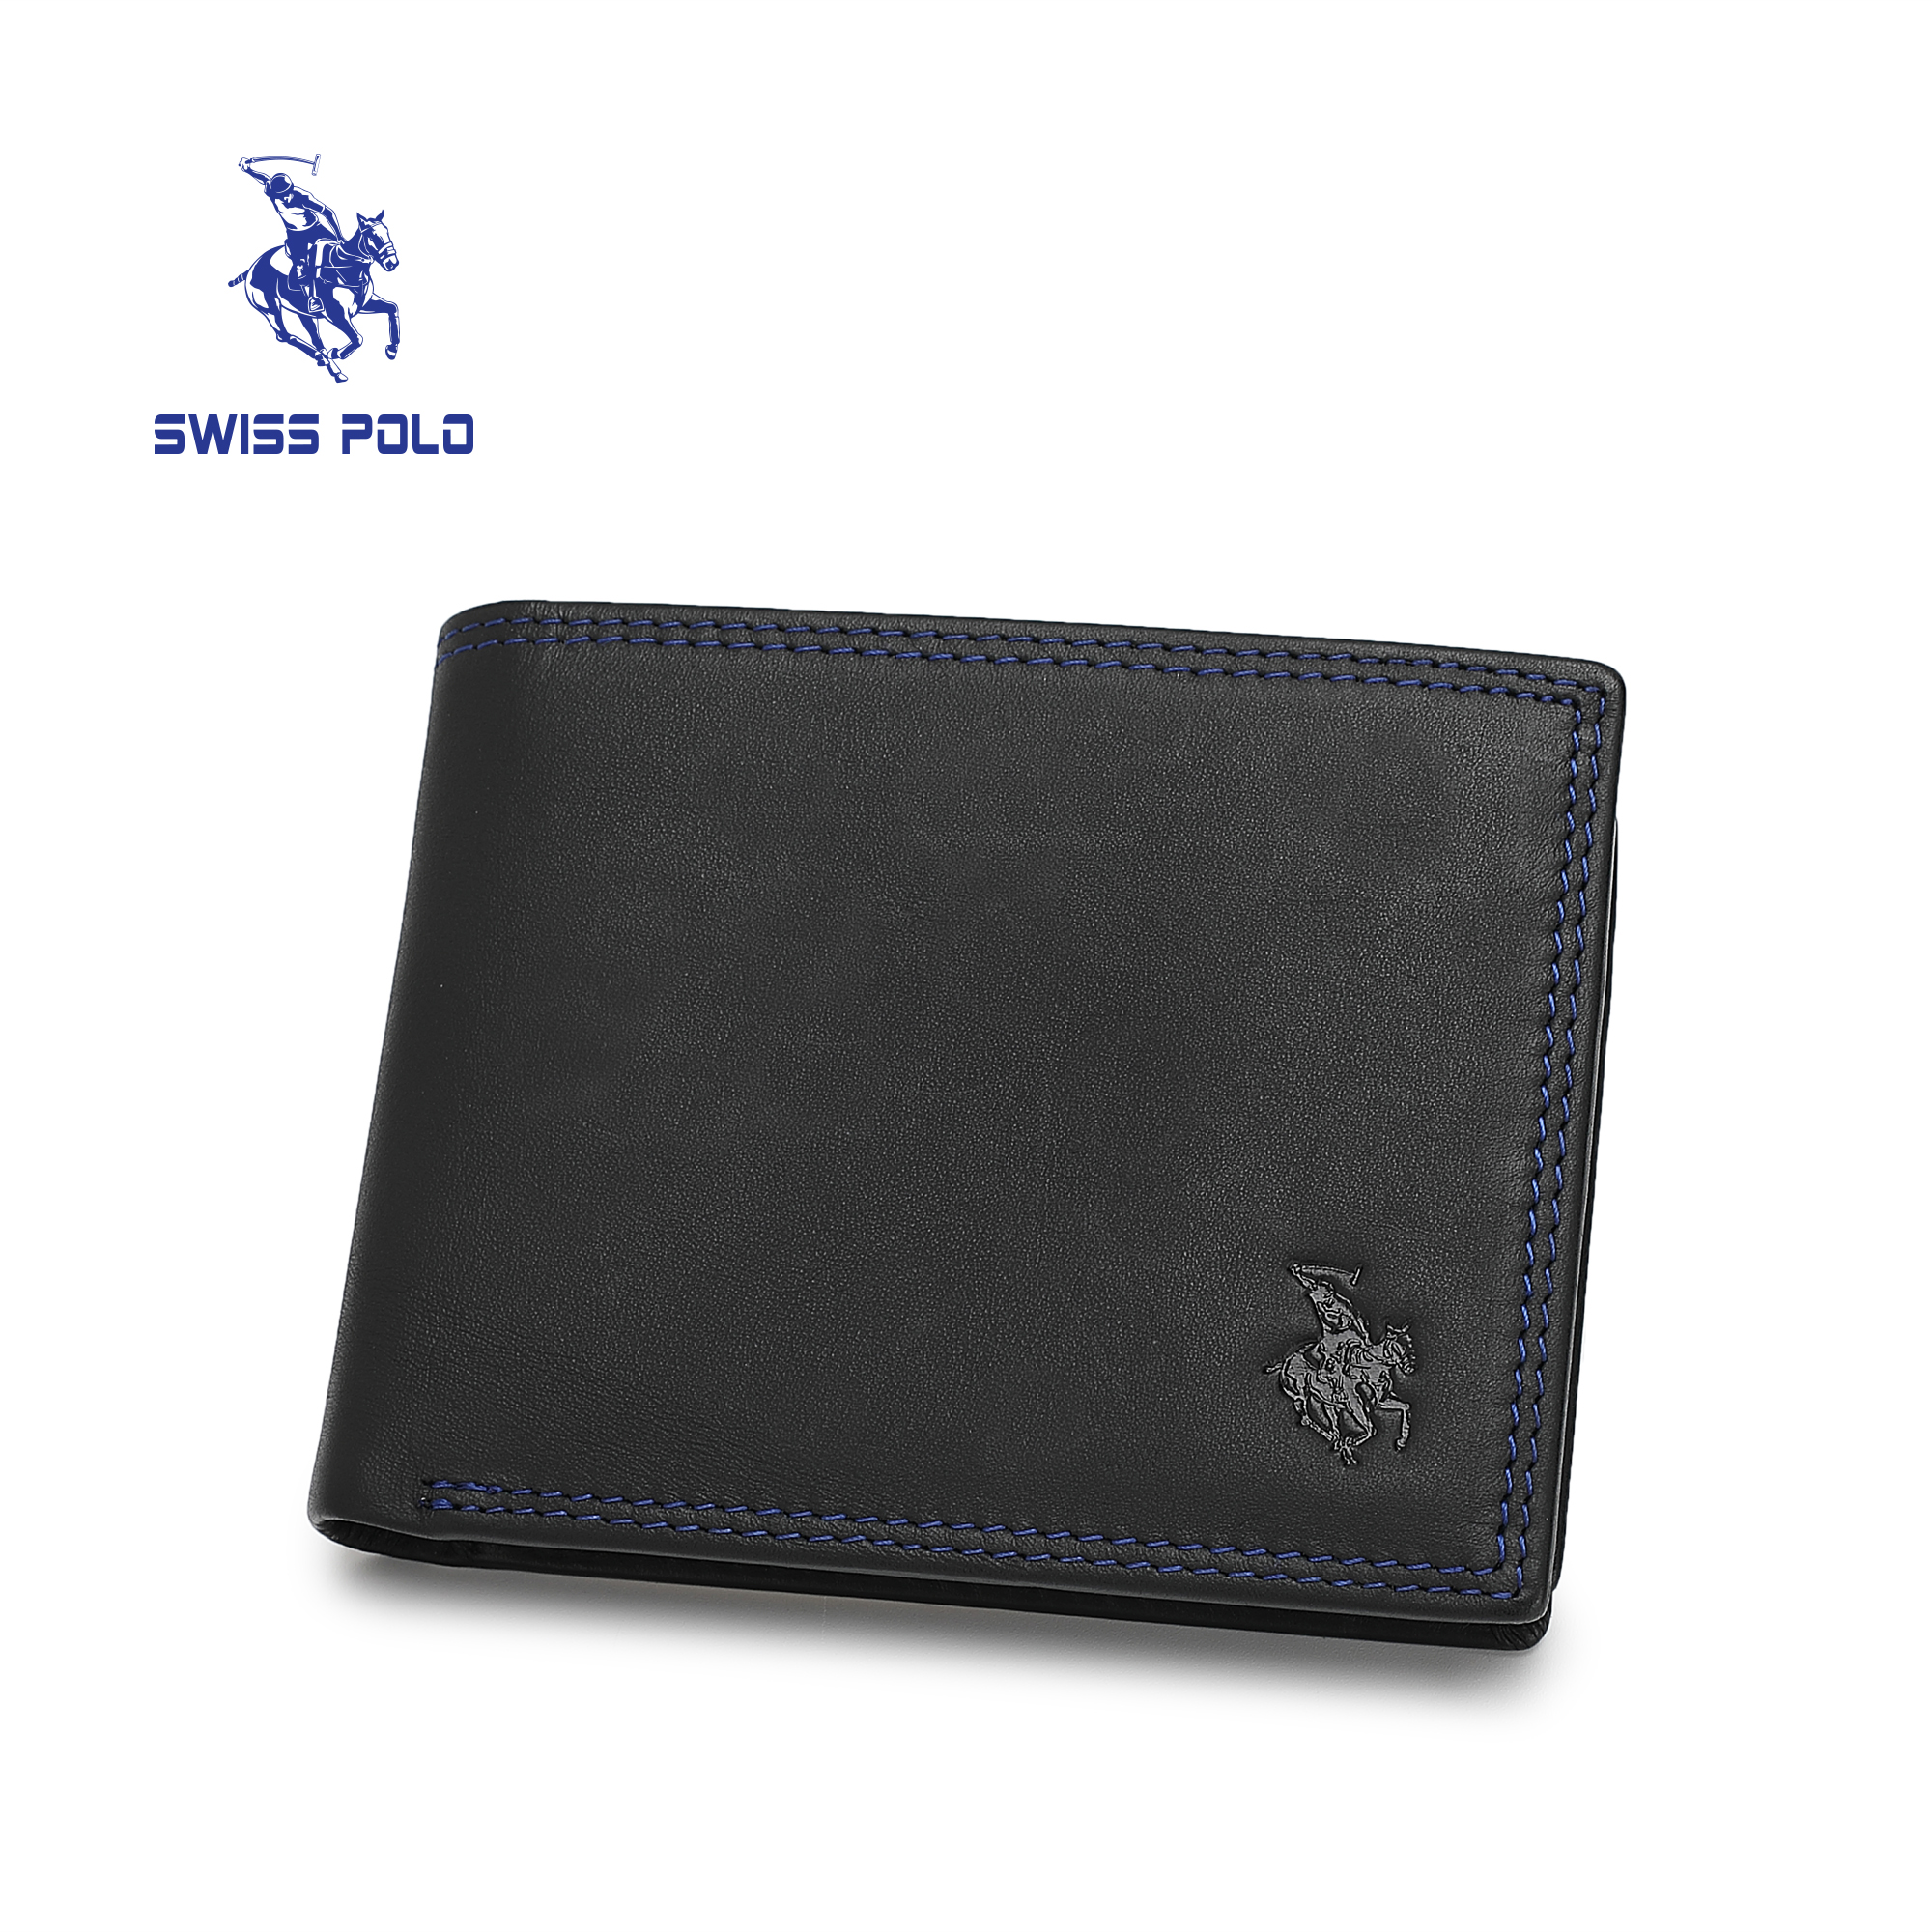 SWISS POLO Genuine Leather RFID Short Wallet SW 181-2 BLACK